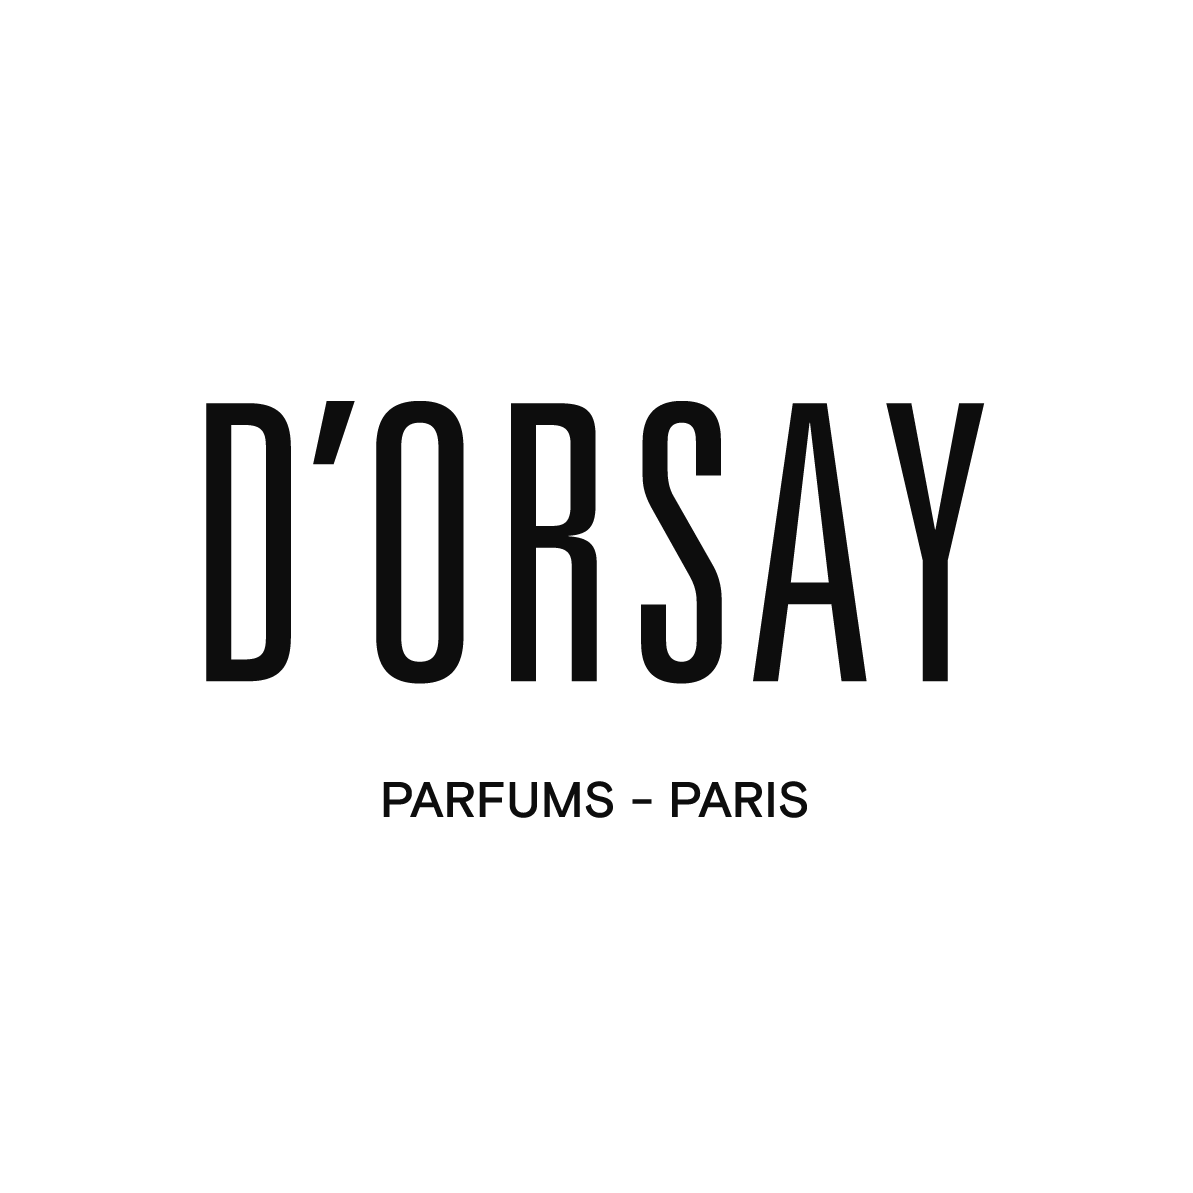 D'Orsay